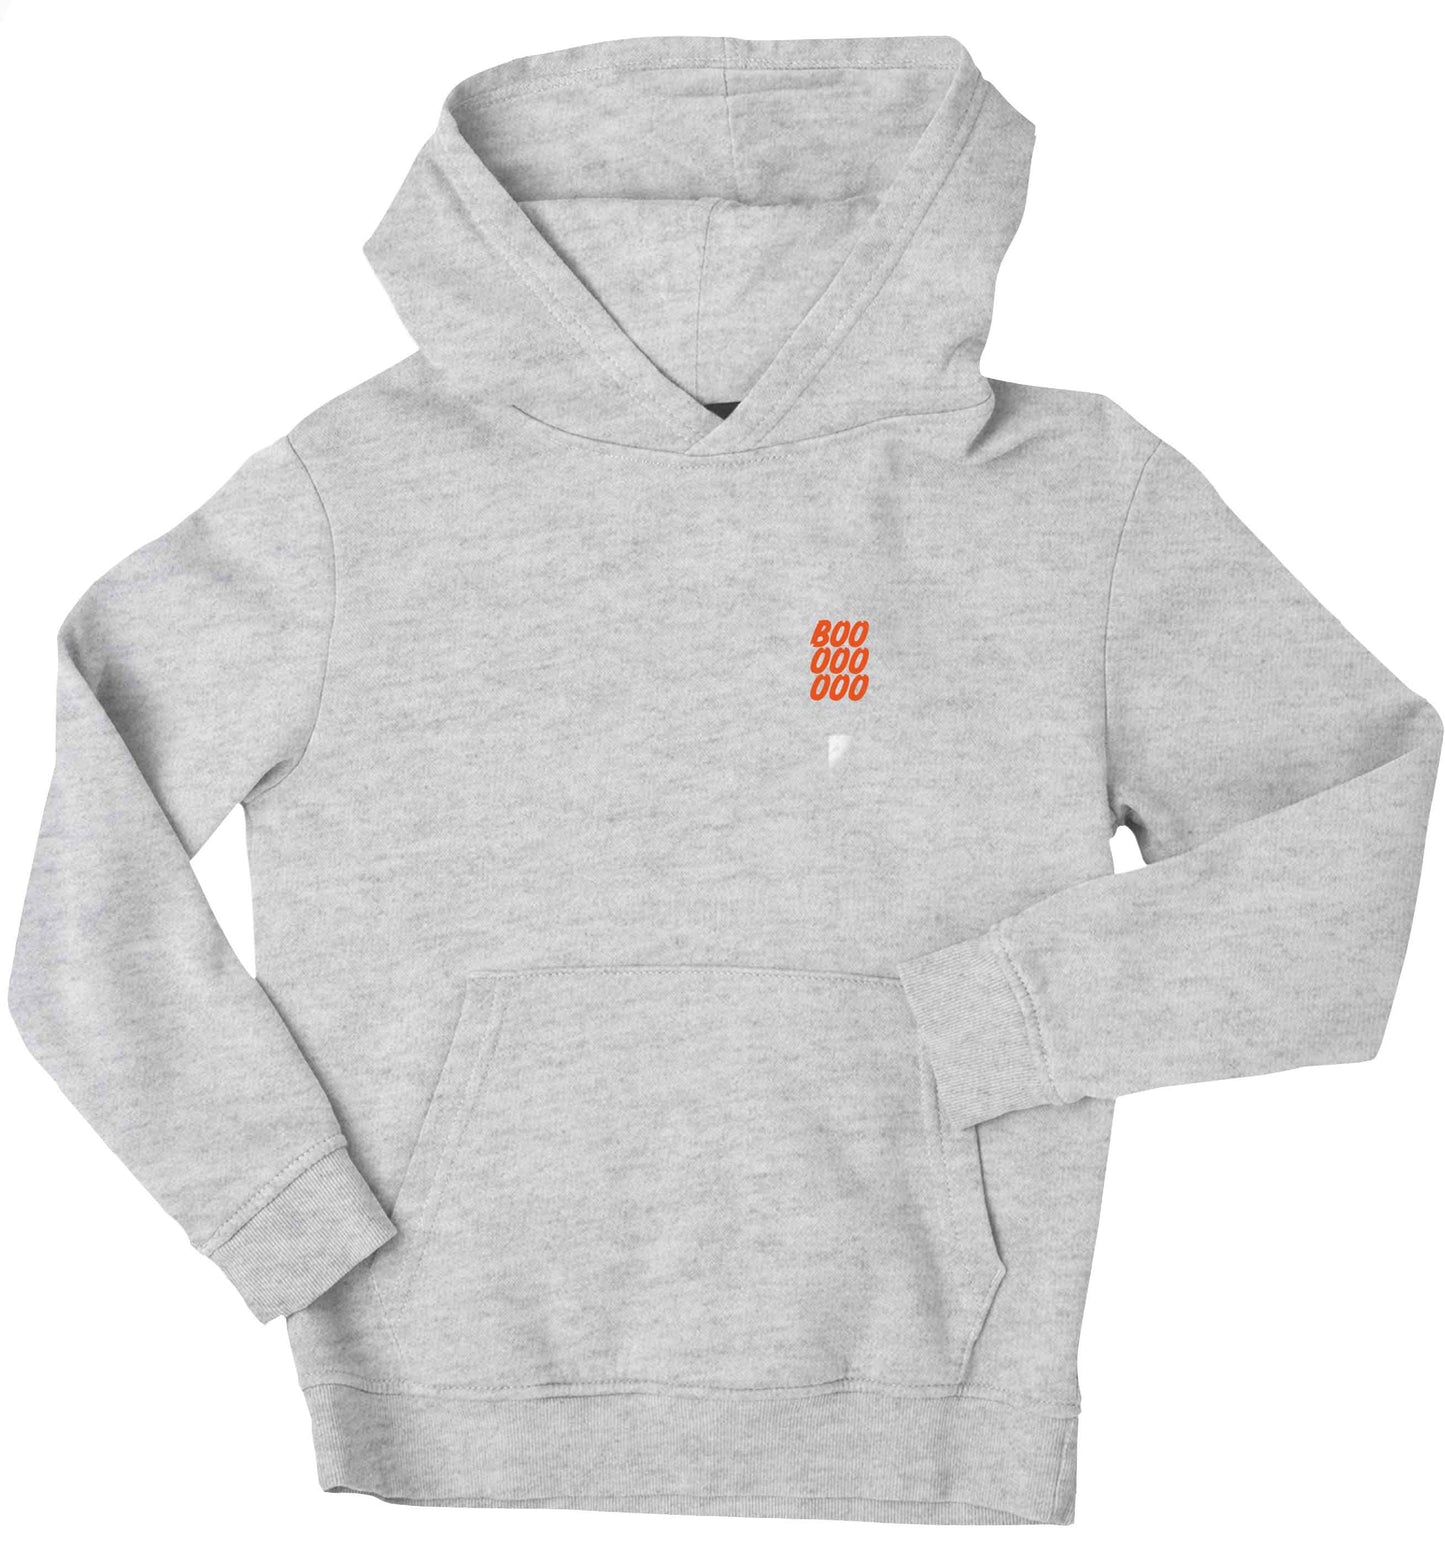 Boo pocket children's grey hoodie 12-13 Years